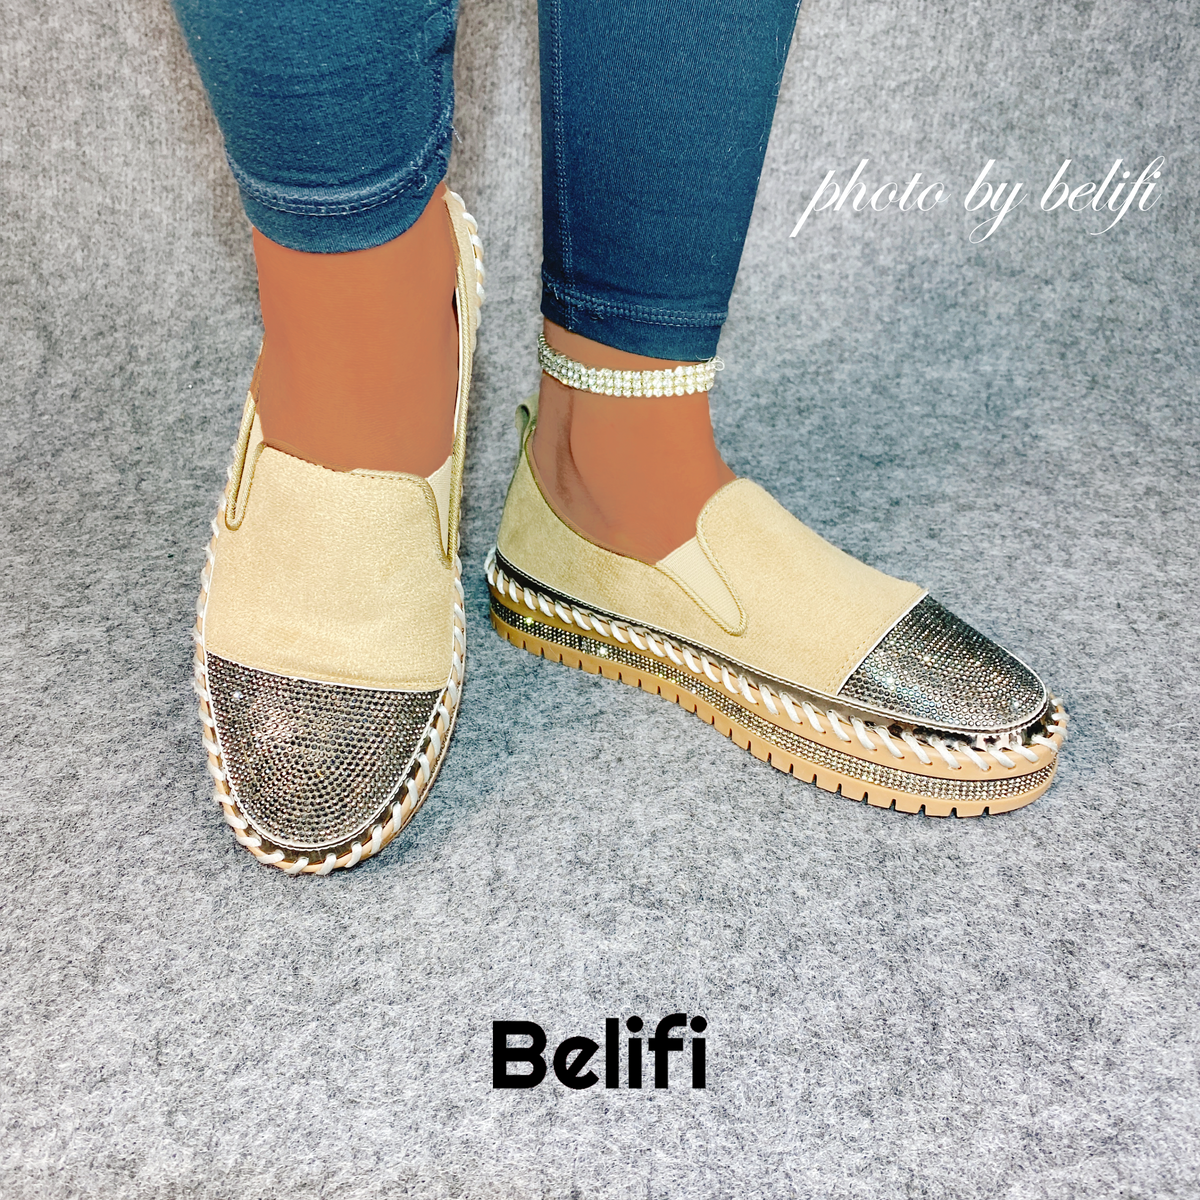 Belifi Platform Versatile Breathable Top Rhinestones Shoes